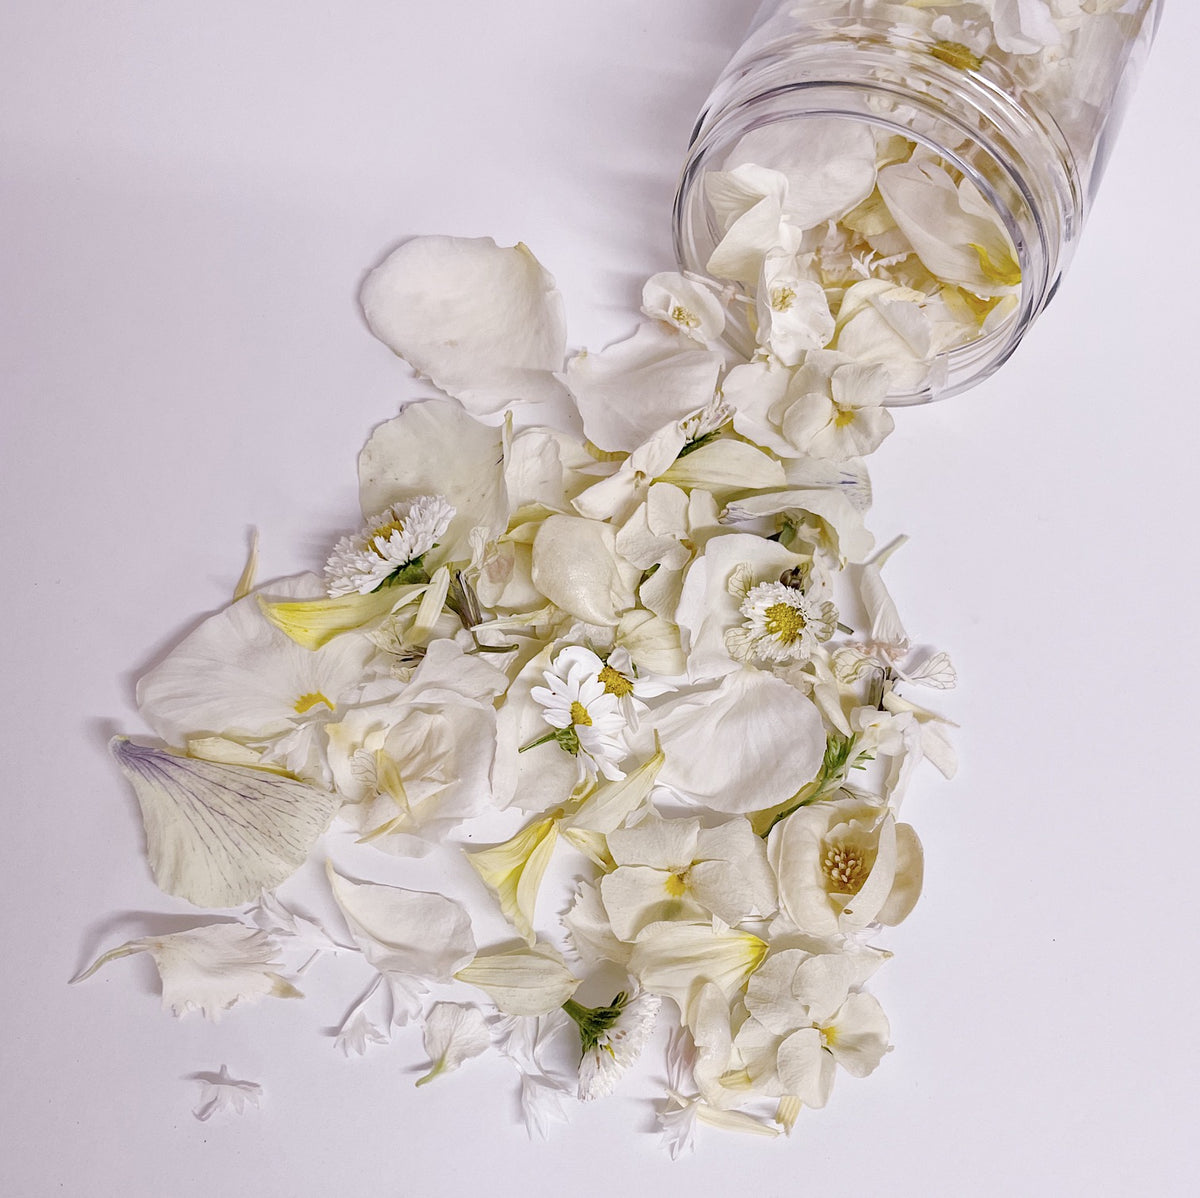 WHITE WEDDING FLOWERFETTI® - Freeze Dried Edible Flower Confetti